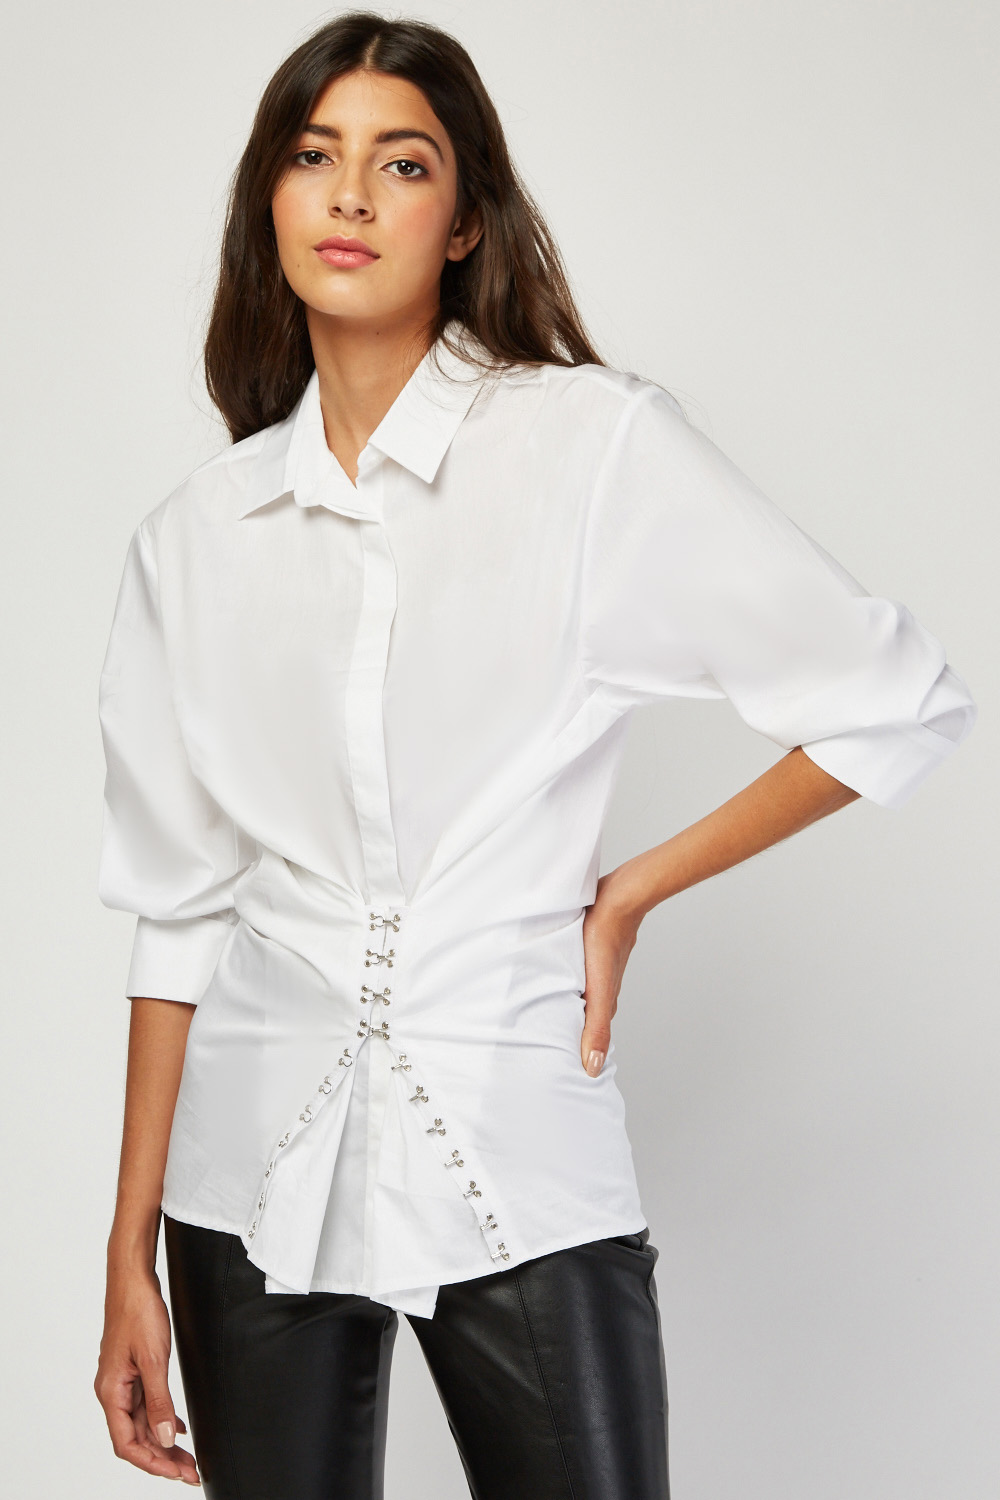 Corset Style White Shirt - Just $7